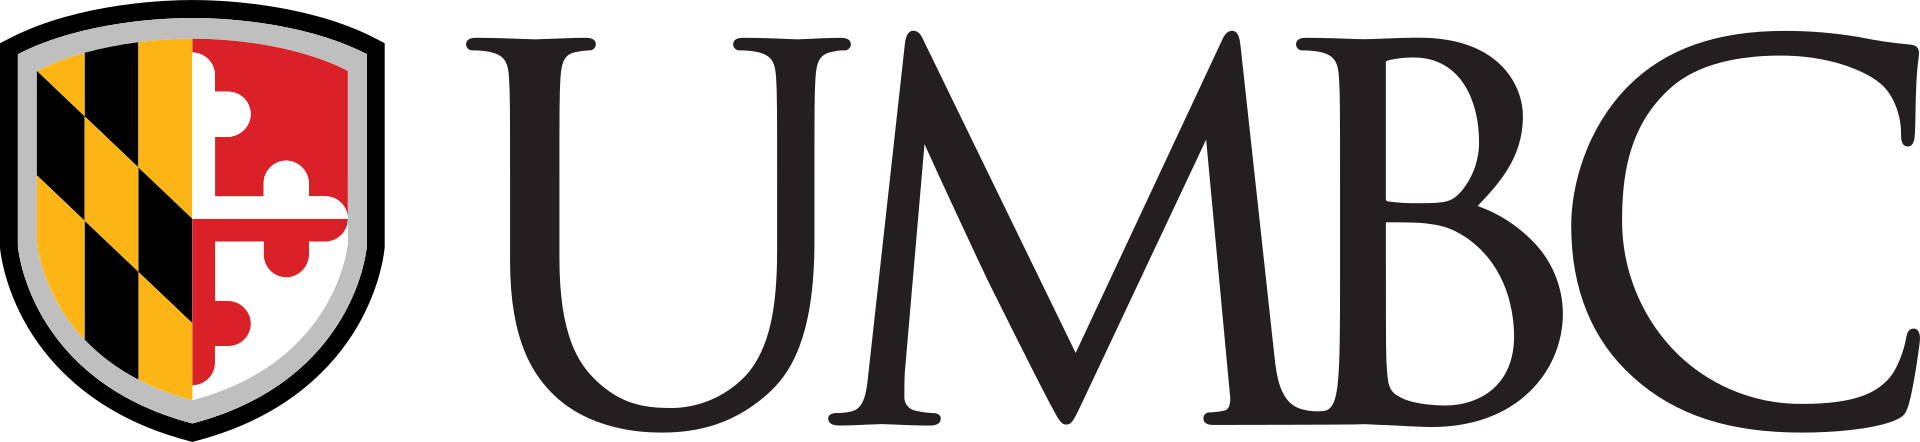 University of Maryland, Baltimore County (UMBC) logo, By University of Maryland, Baltimore County - https://styleguide.umbc.edu/logos/, Public Domain, https://commons.wikimedia.org/w/index.php?curid=67684930